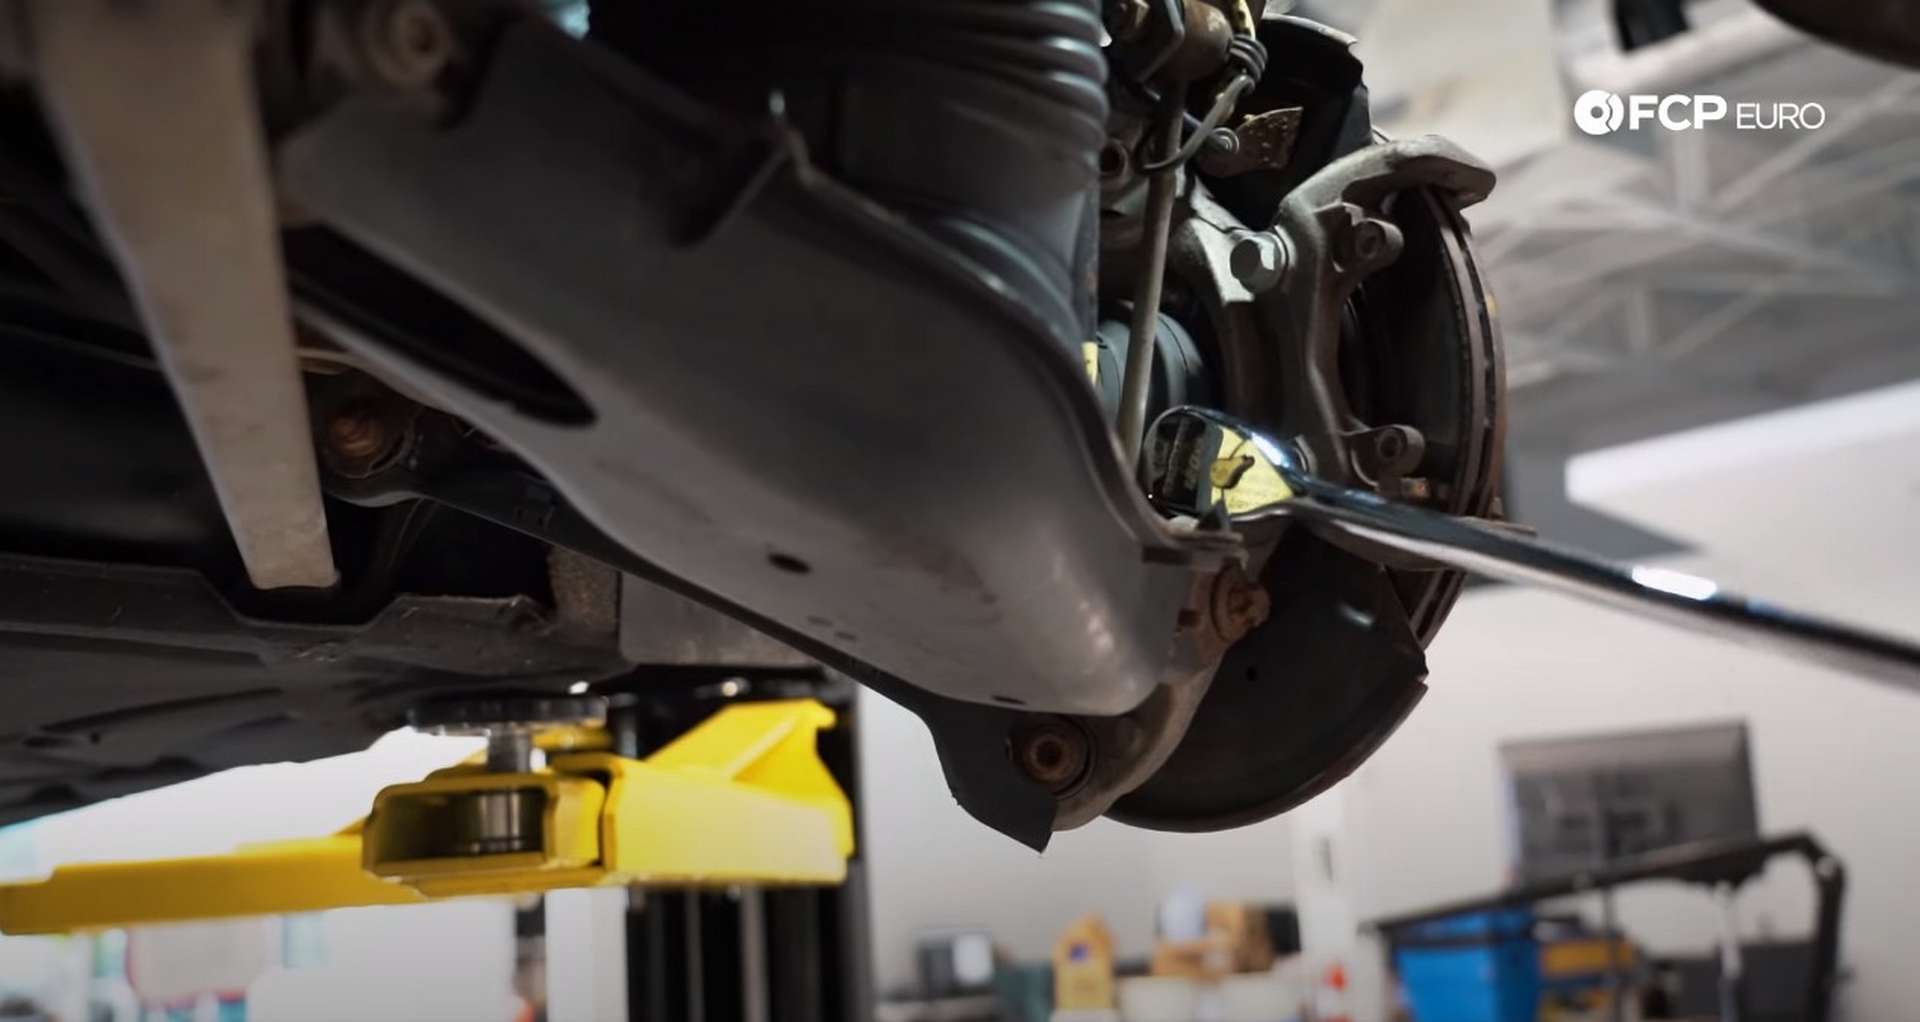 DIY Mercedes W211/212 Rear Brake Job removing the caliper bracket bolts